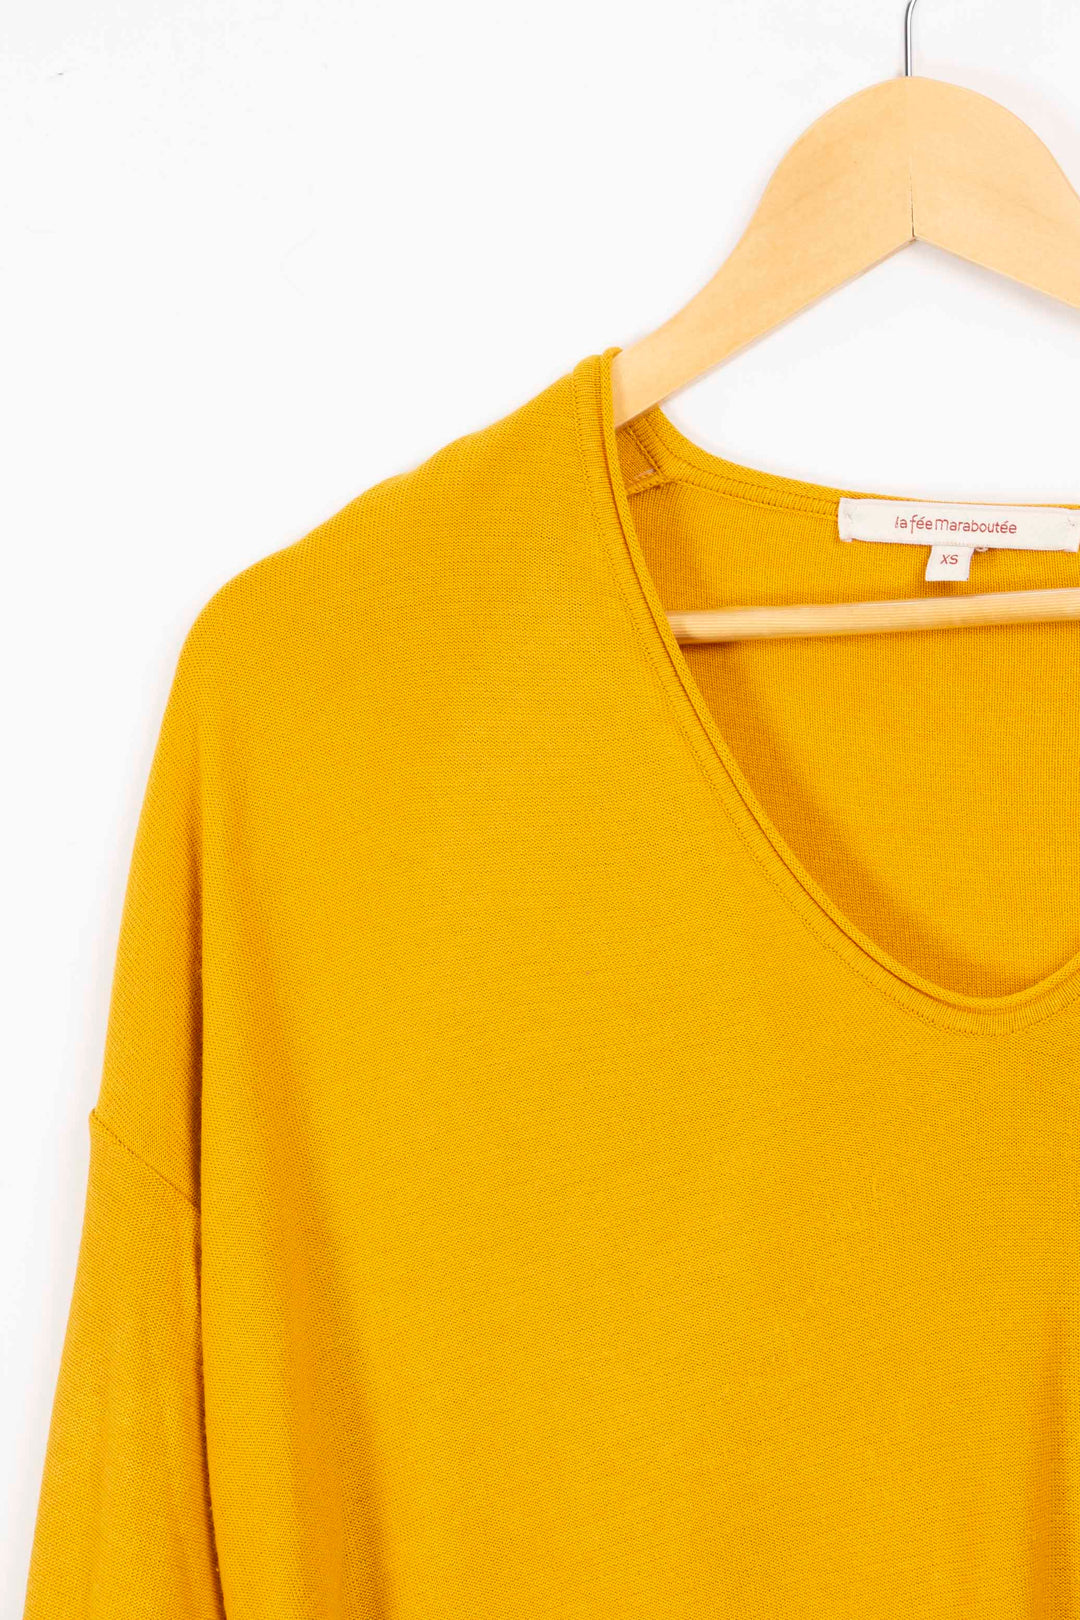 La Fée Maraboutée yellow sweater - XS